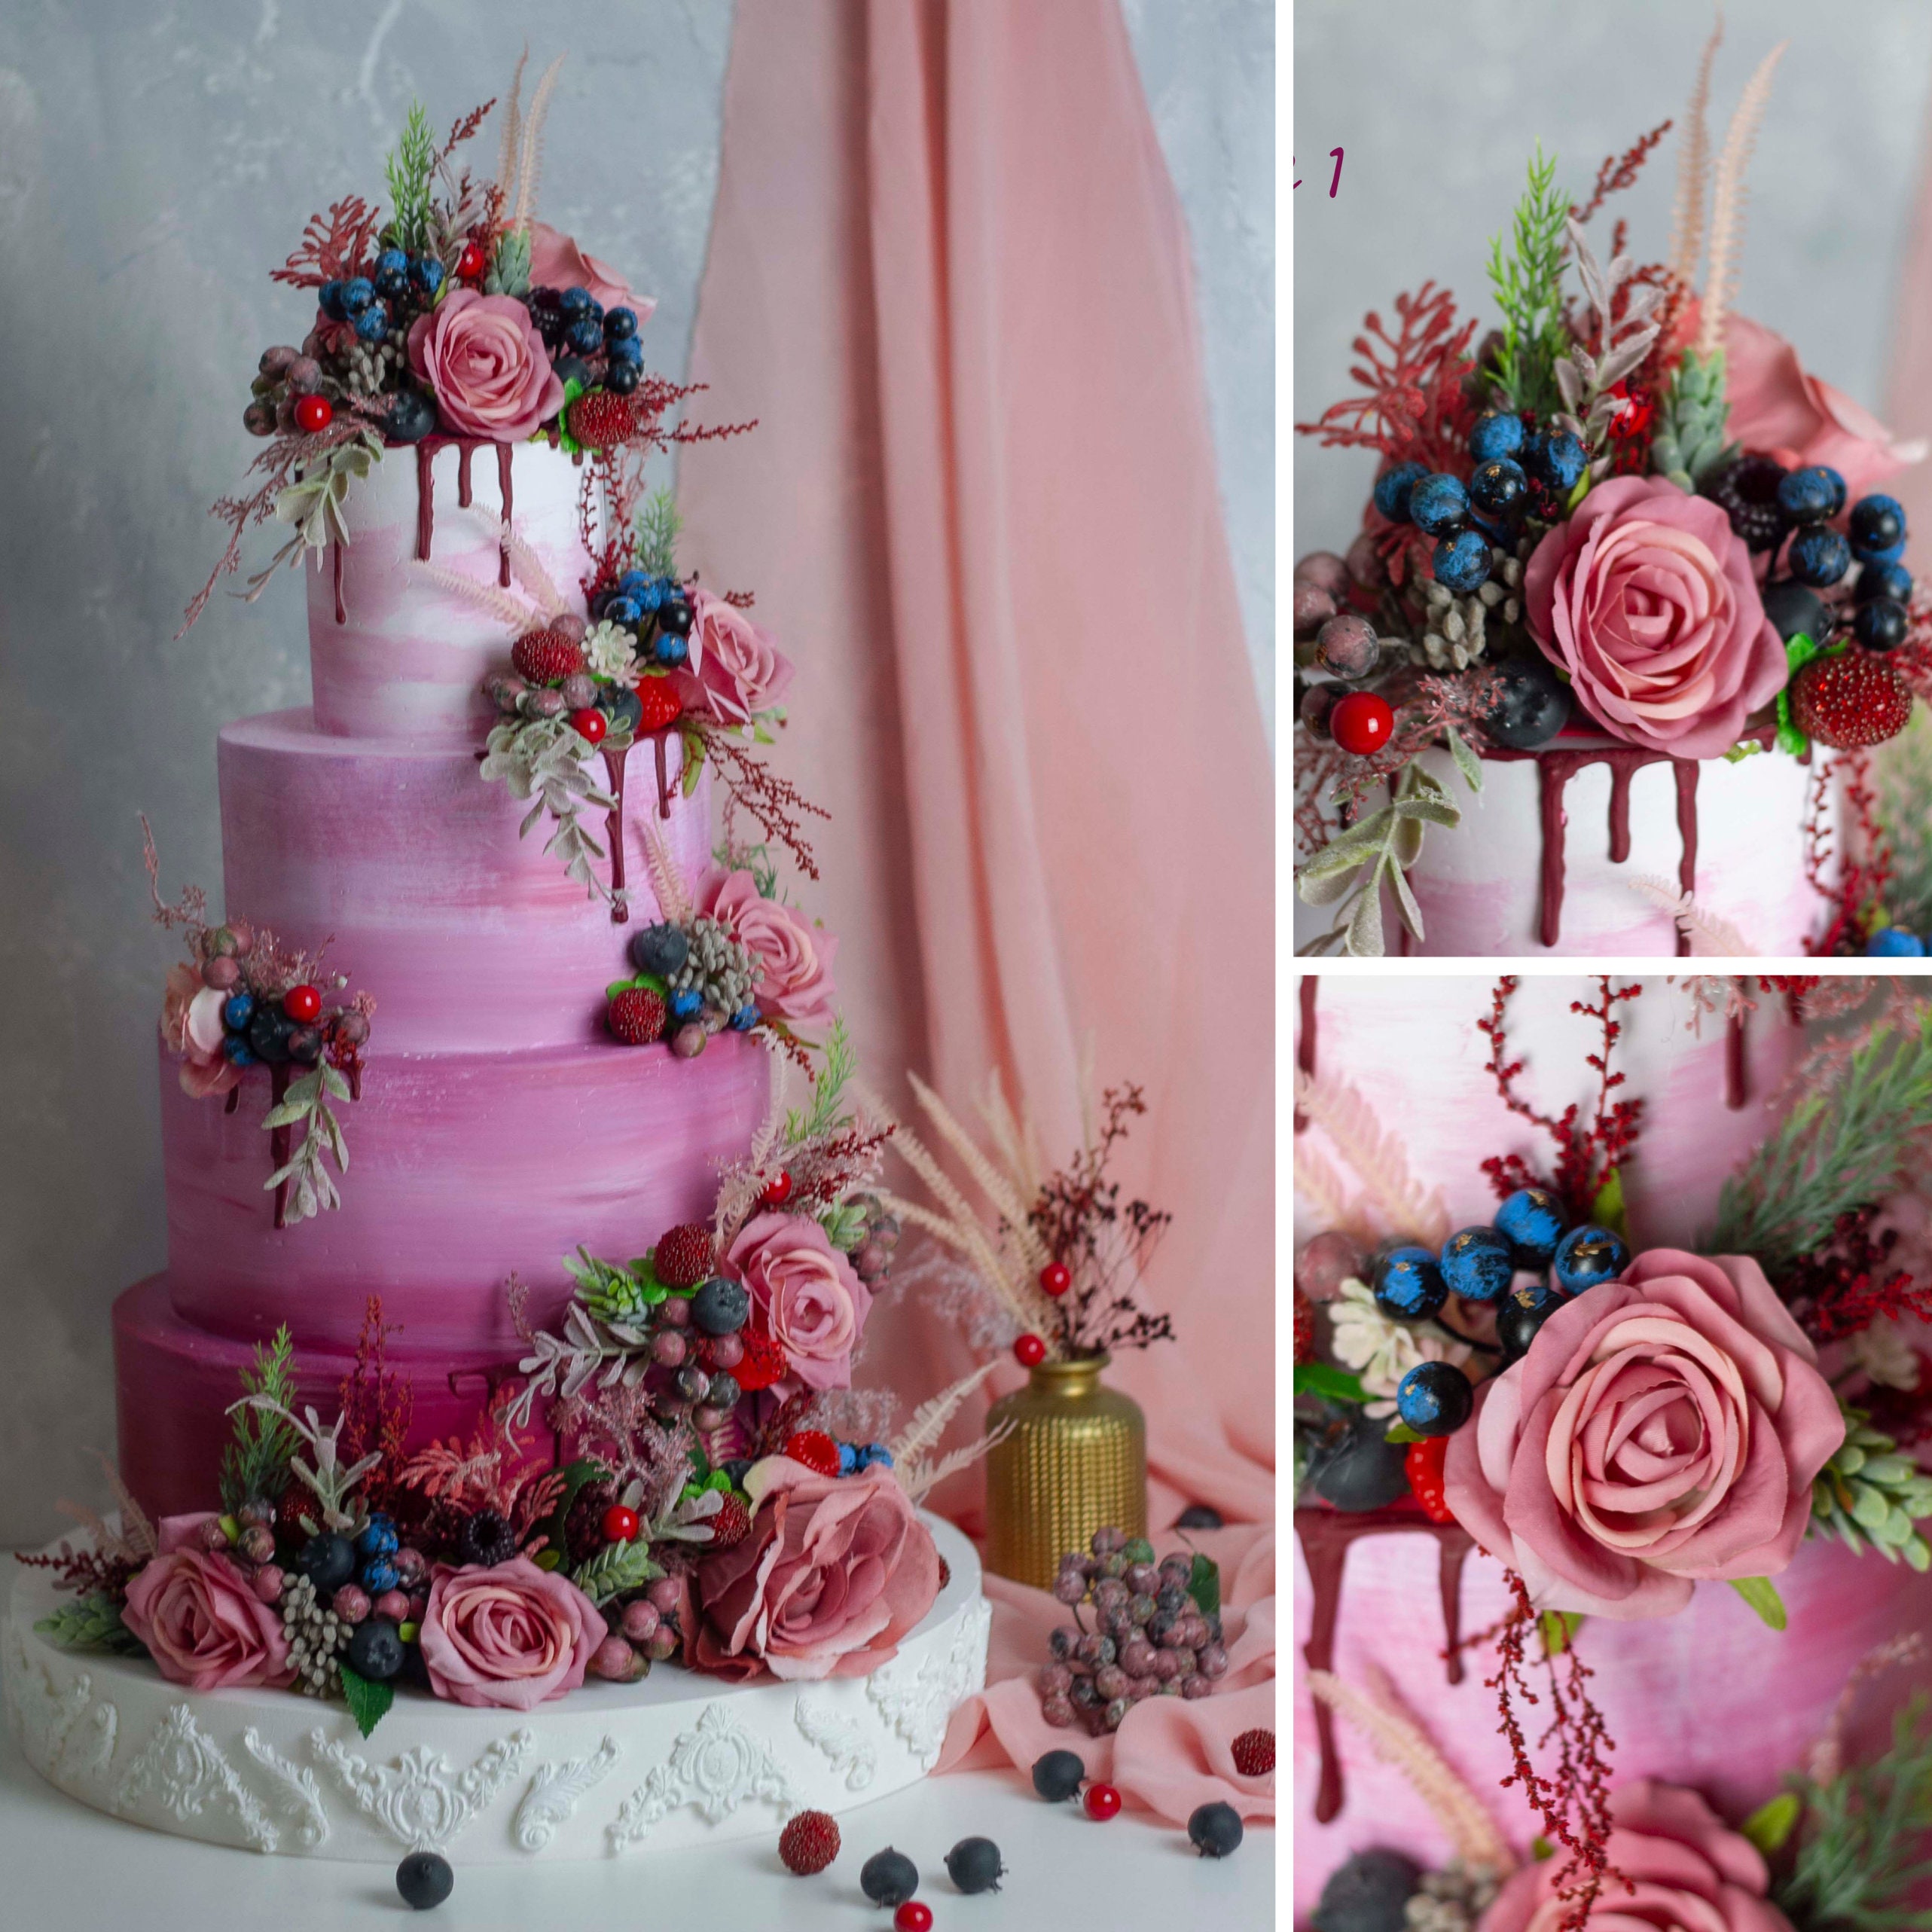 torta finta fatta da me😍#tortafinta #farfalle #rose #fiori #torta #to